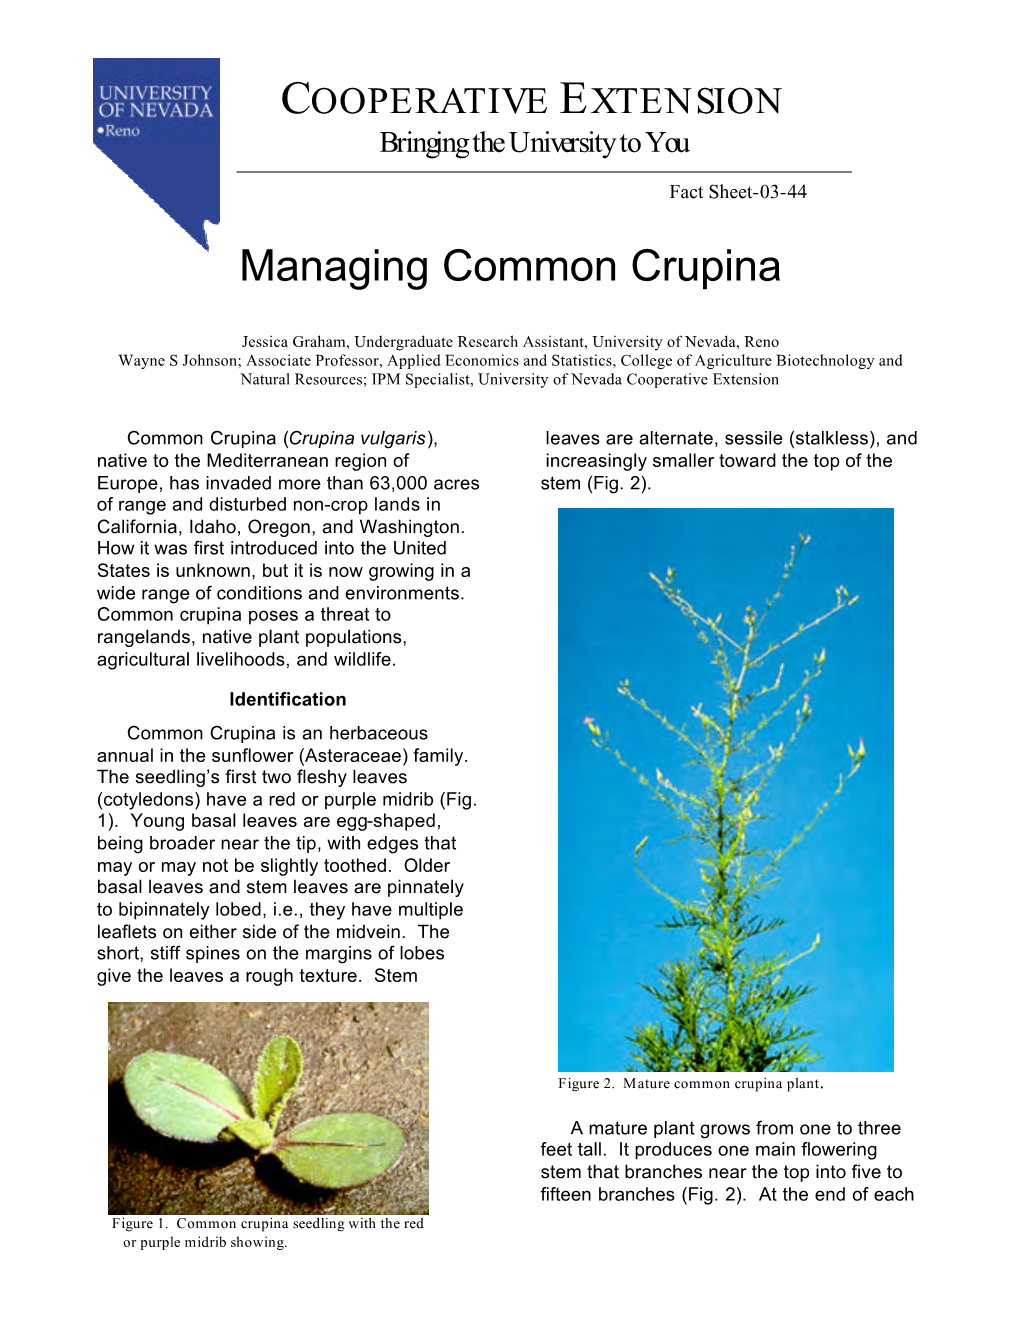 Managing Common Crupina